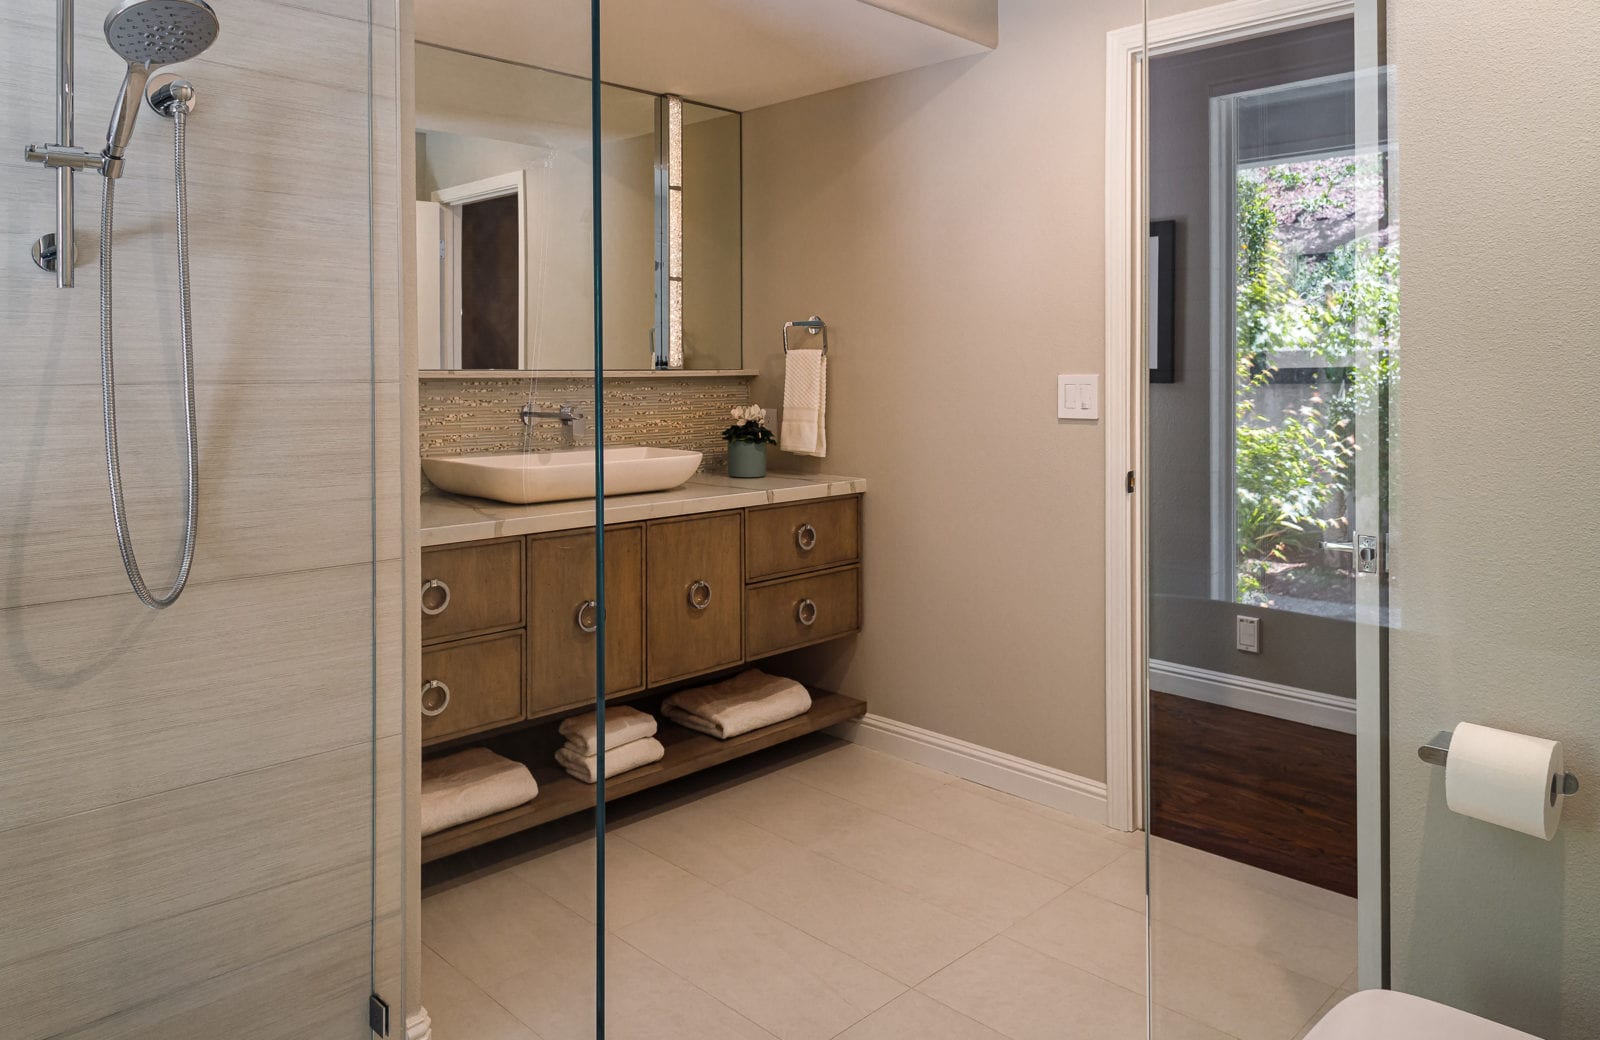 hall bathroom remodel with custom vanity and backsplash tile